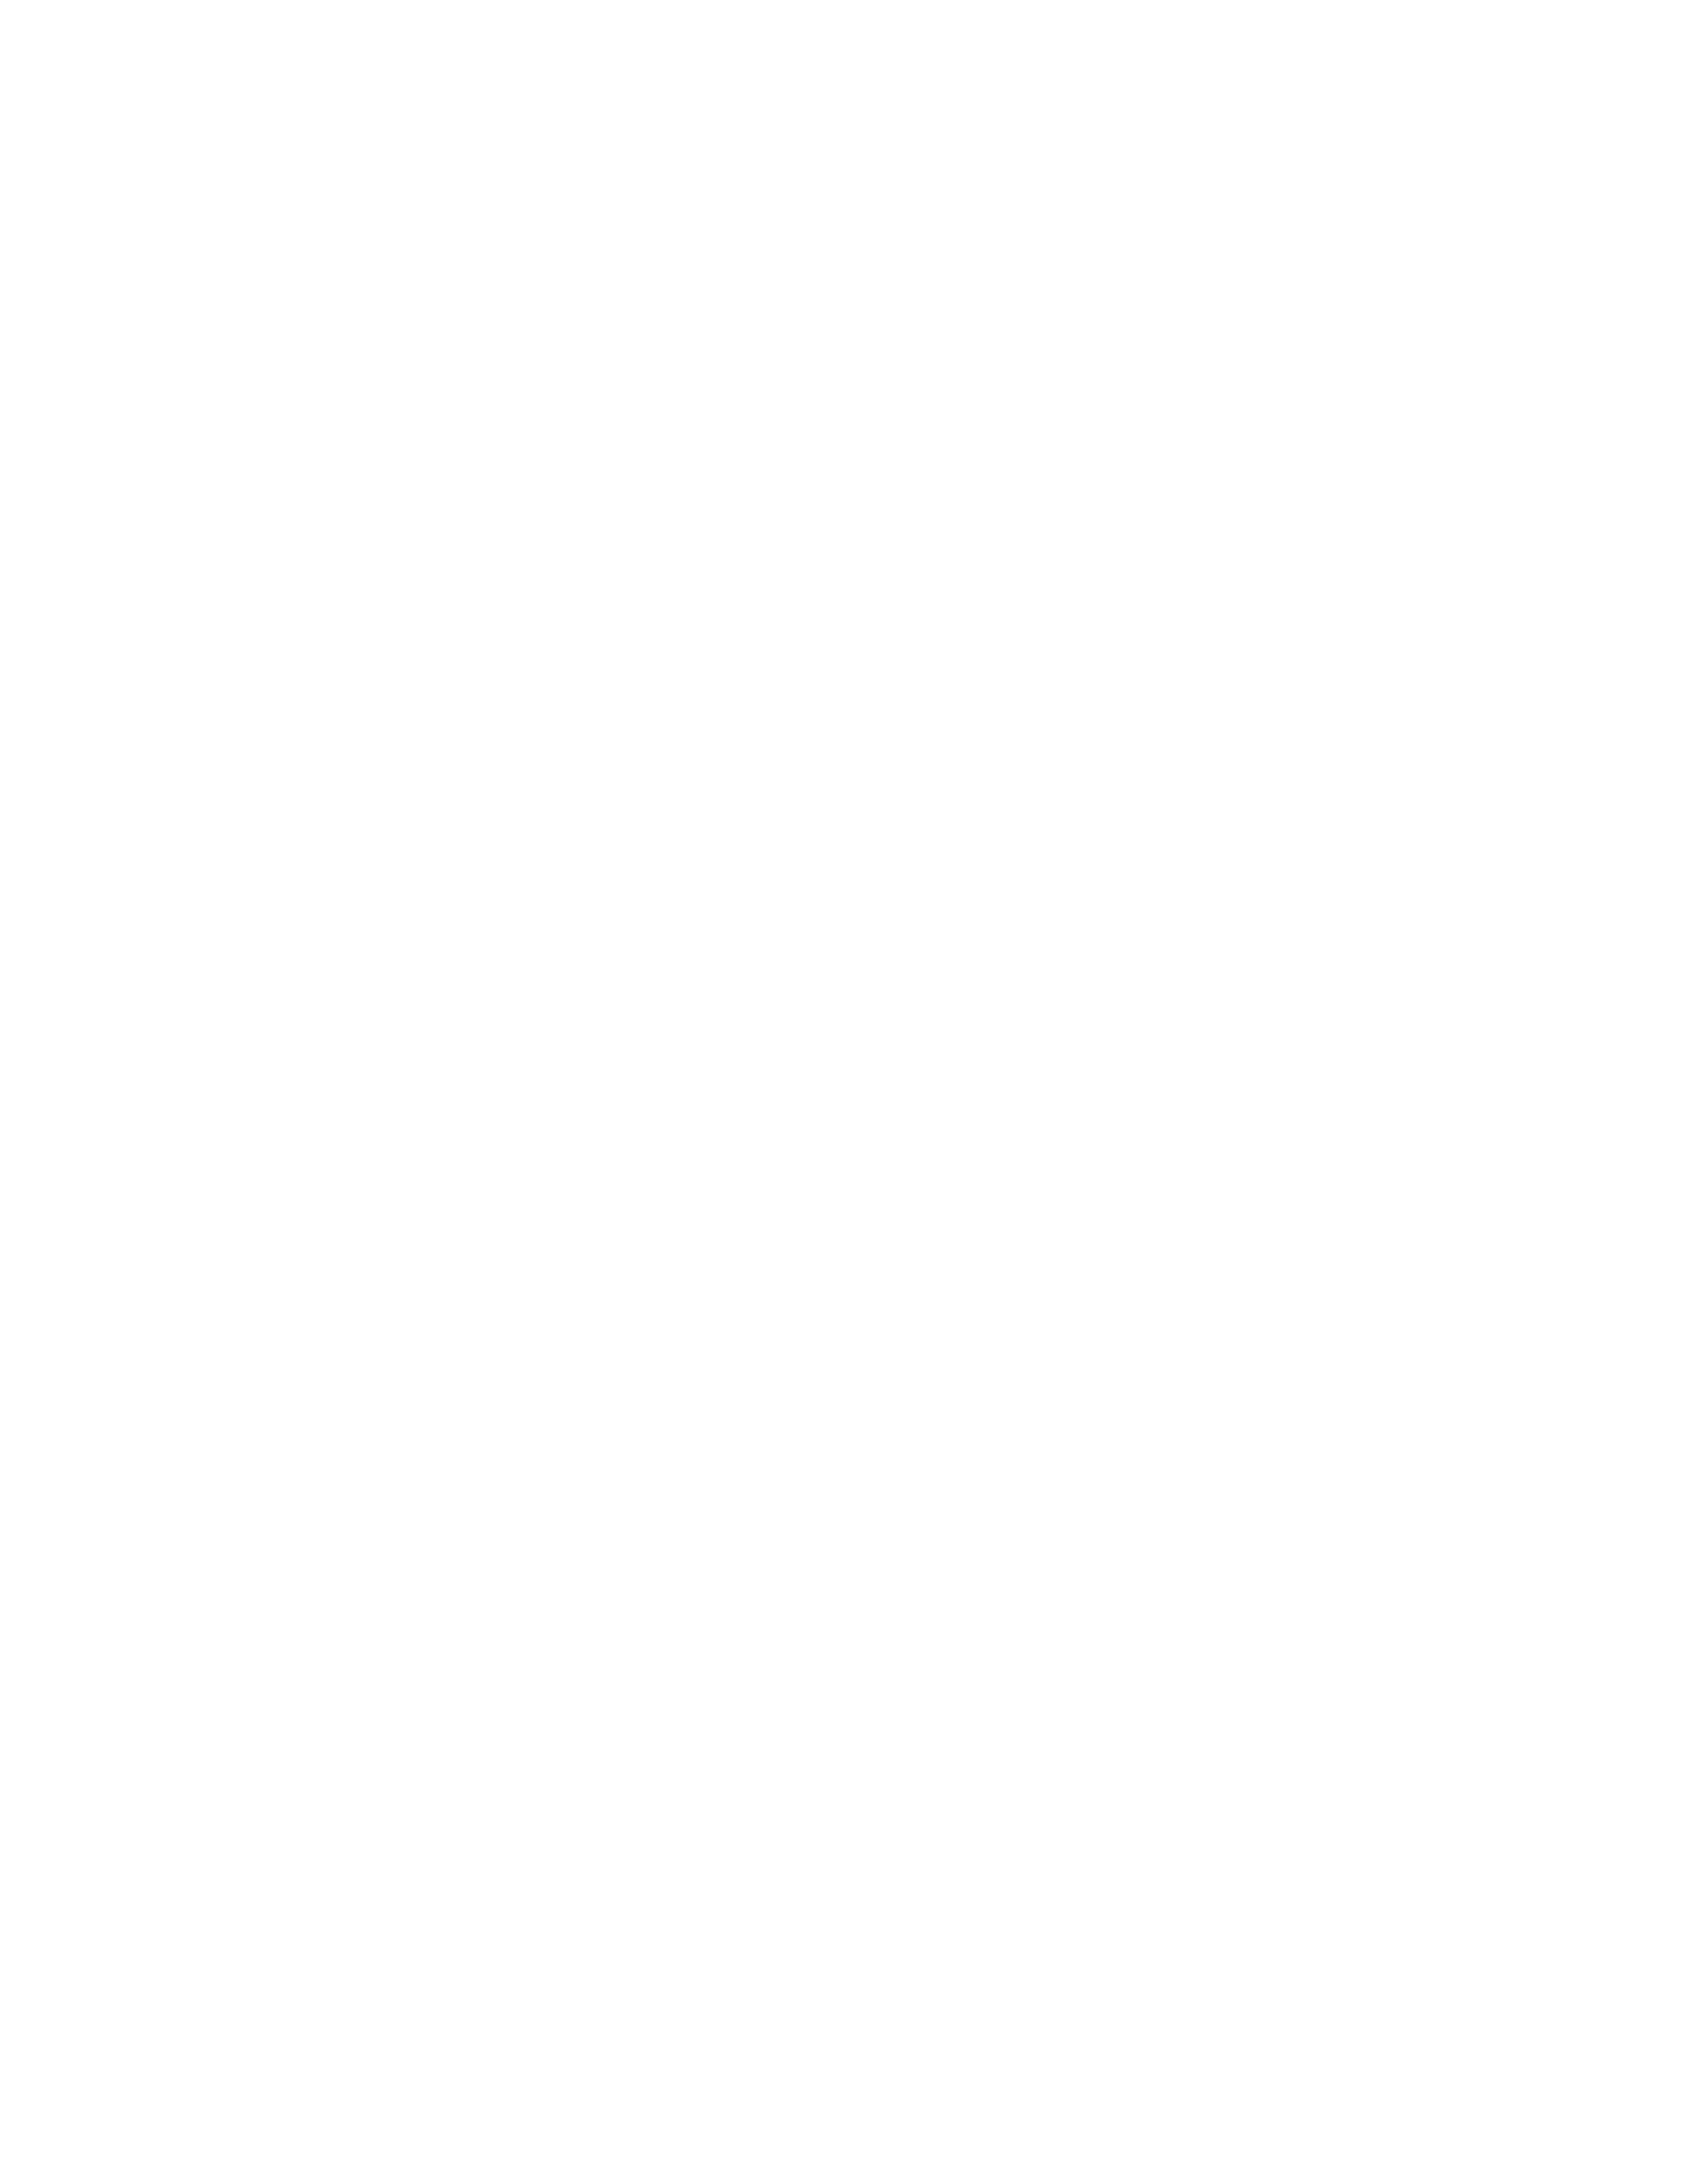 Pritzker School of Medicine logo